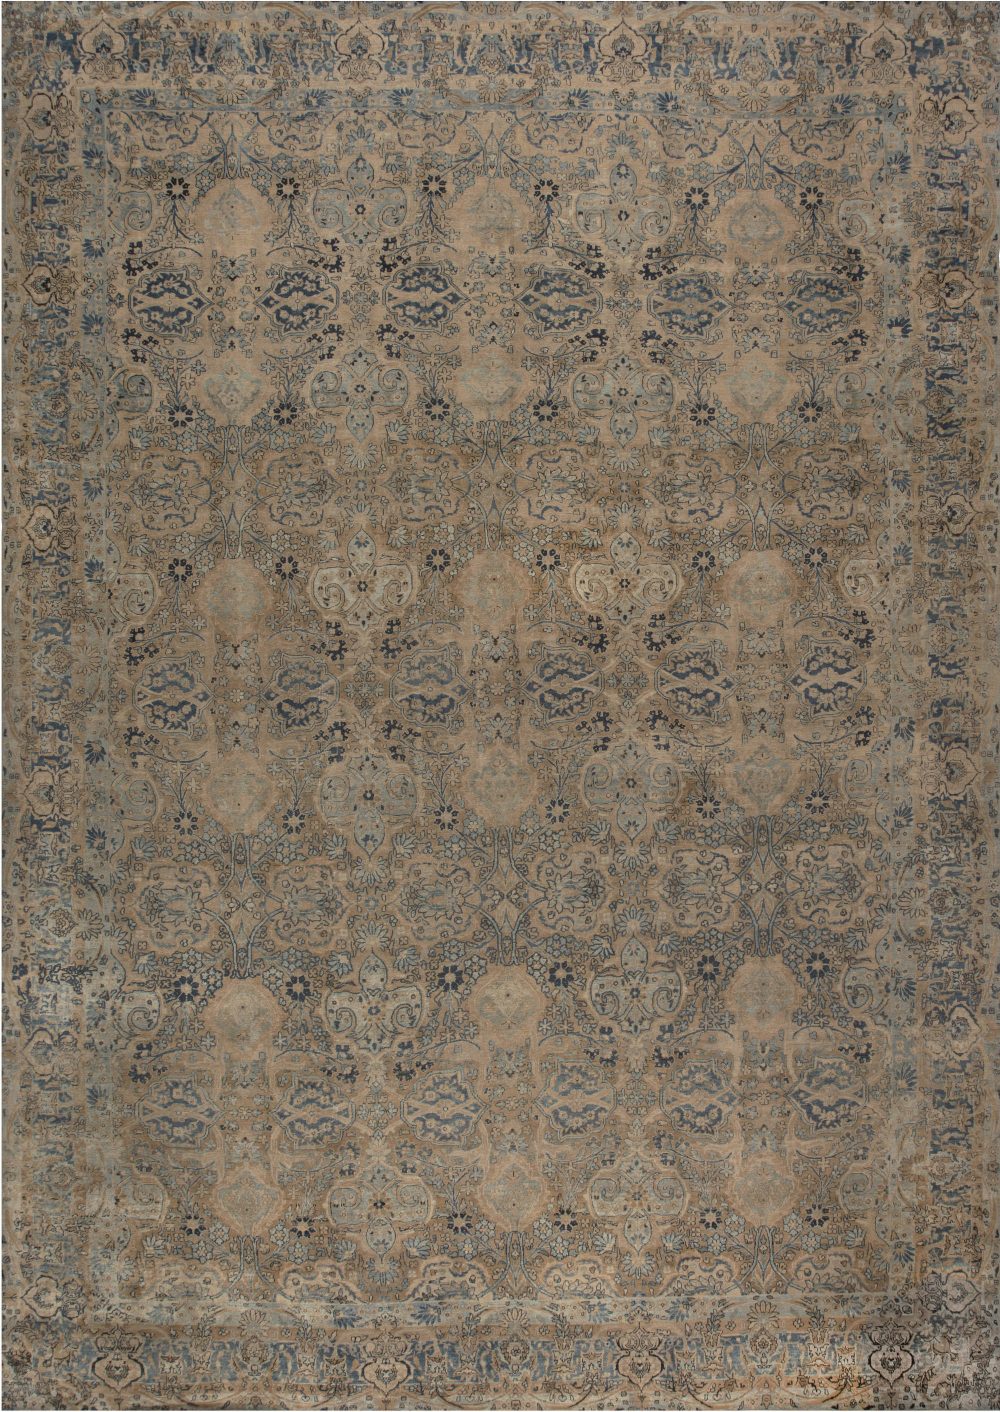 Authentic 19th Century Persian Kirman Carpet BB6727